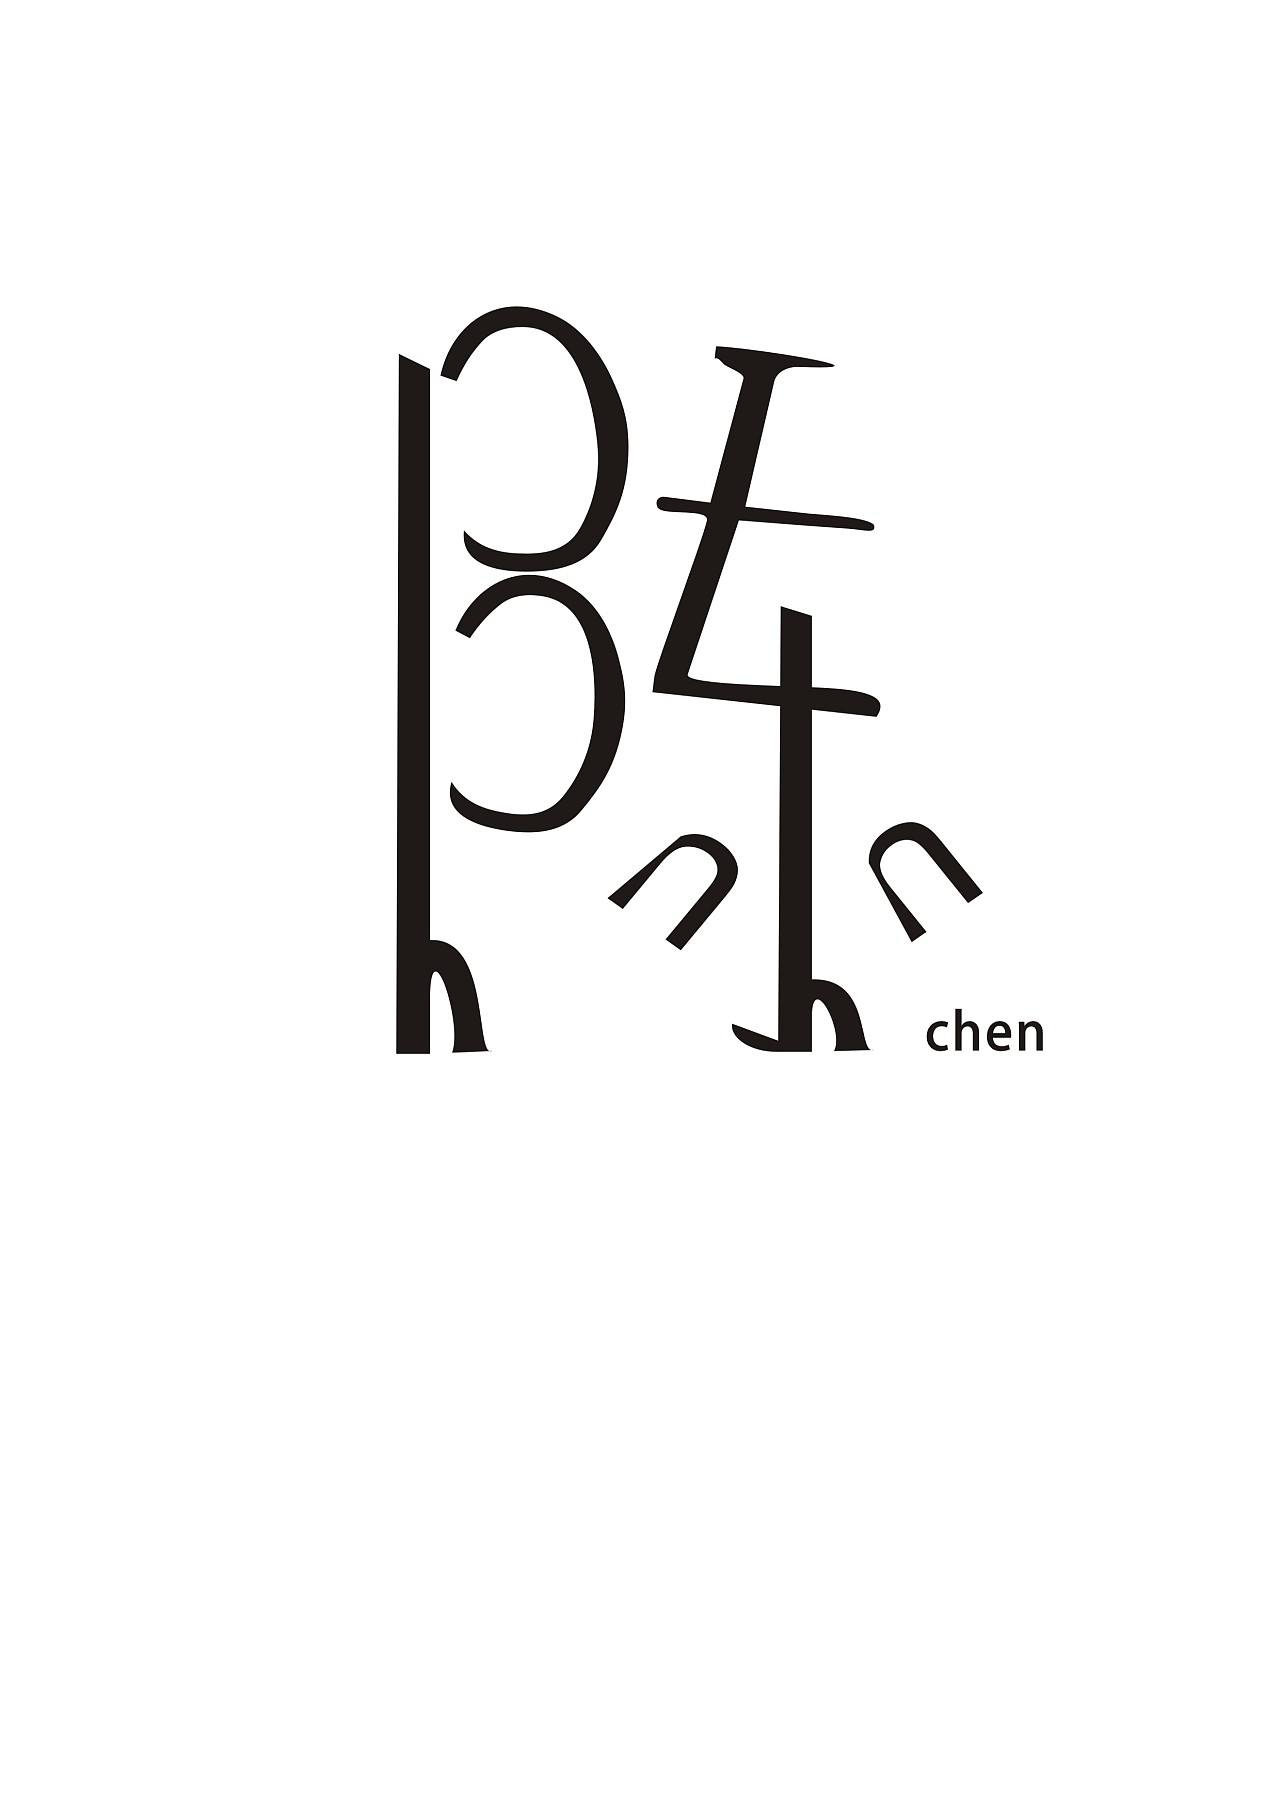 陈字logo设计